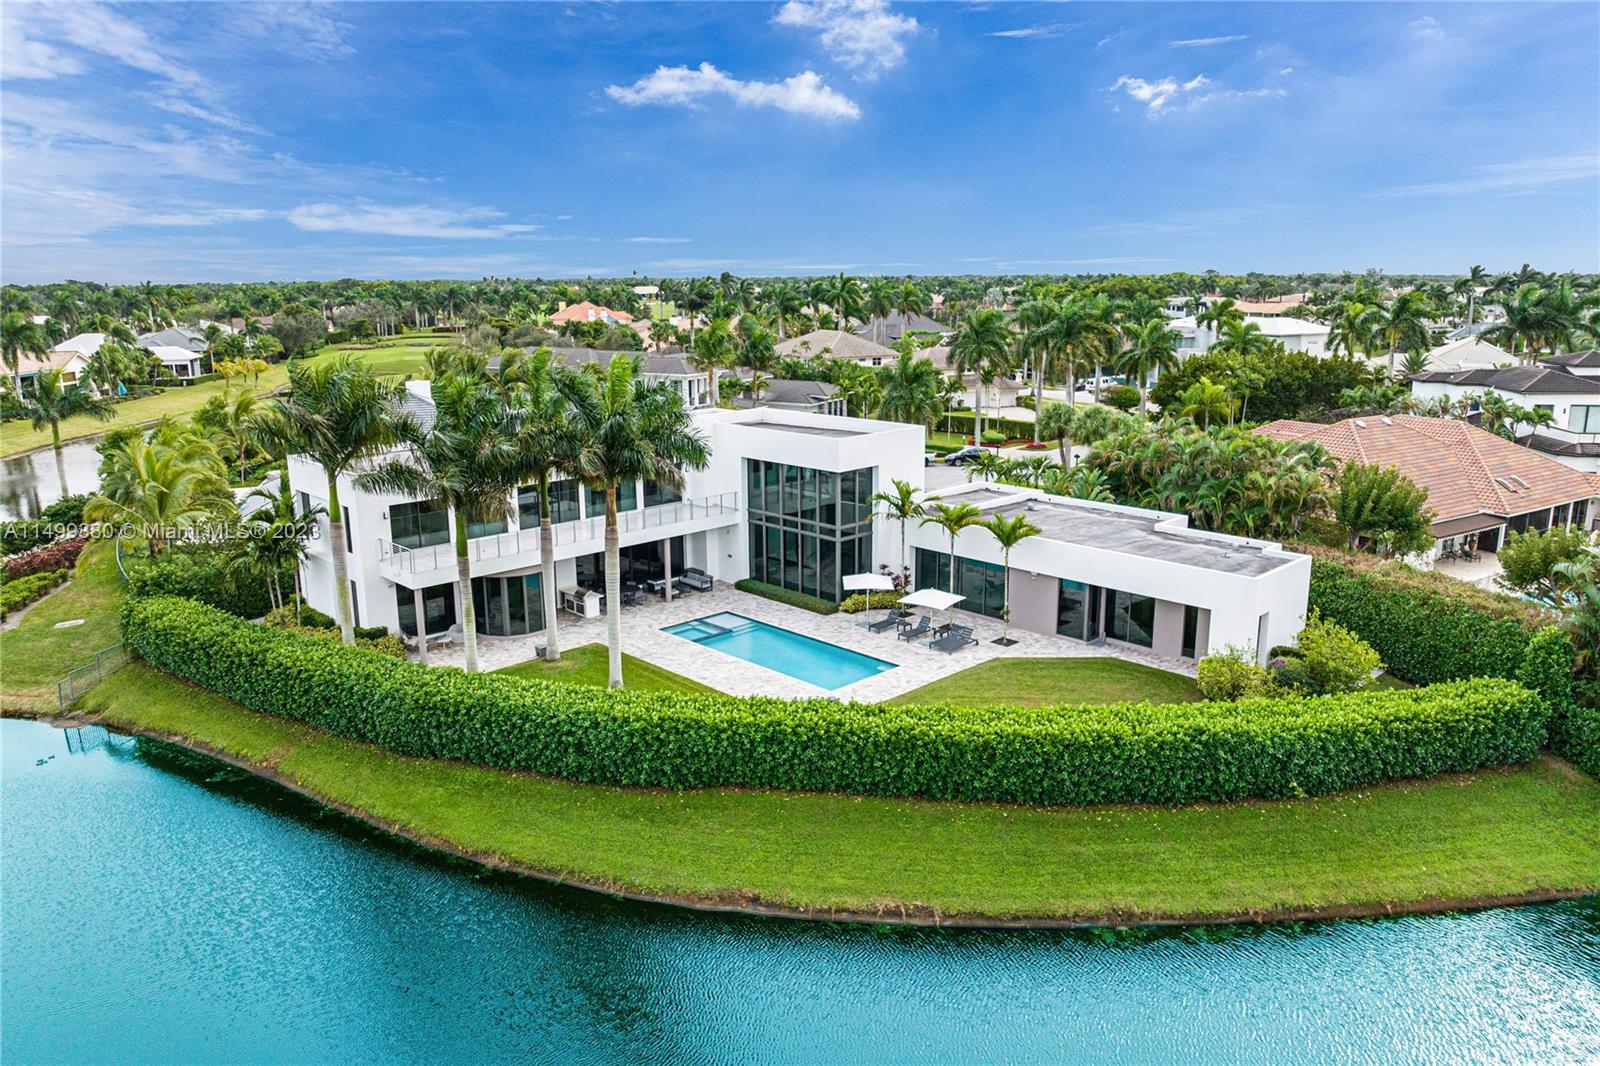 Property for Sale at 7677 Stonehaven Ln Ln, Boca Raton, Broward County, Florida - Bedrooms: 5 
Bathrooms: 8  - $7,950,000